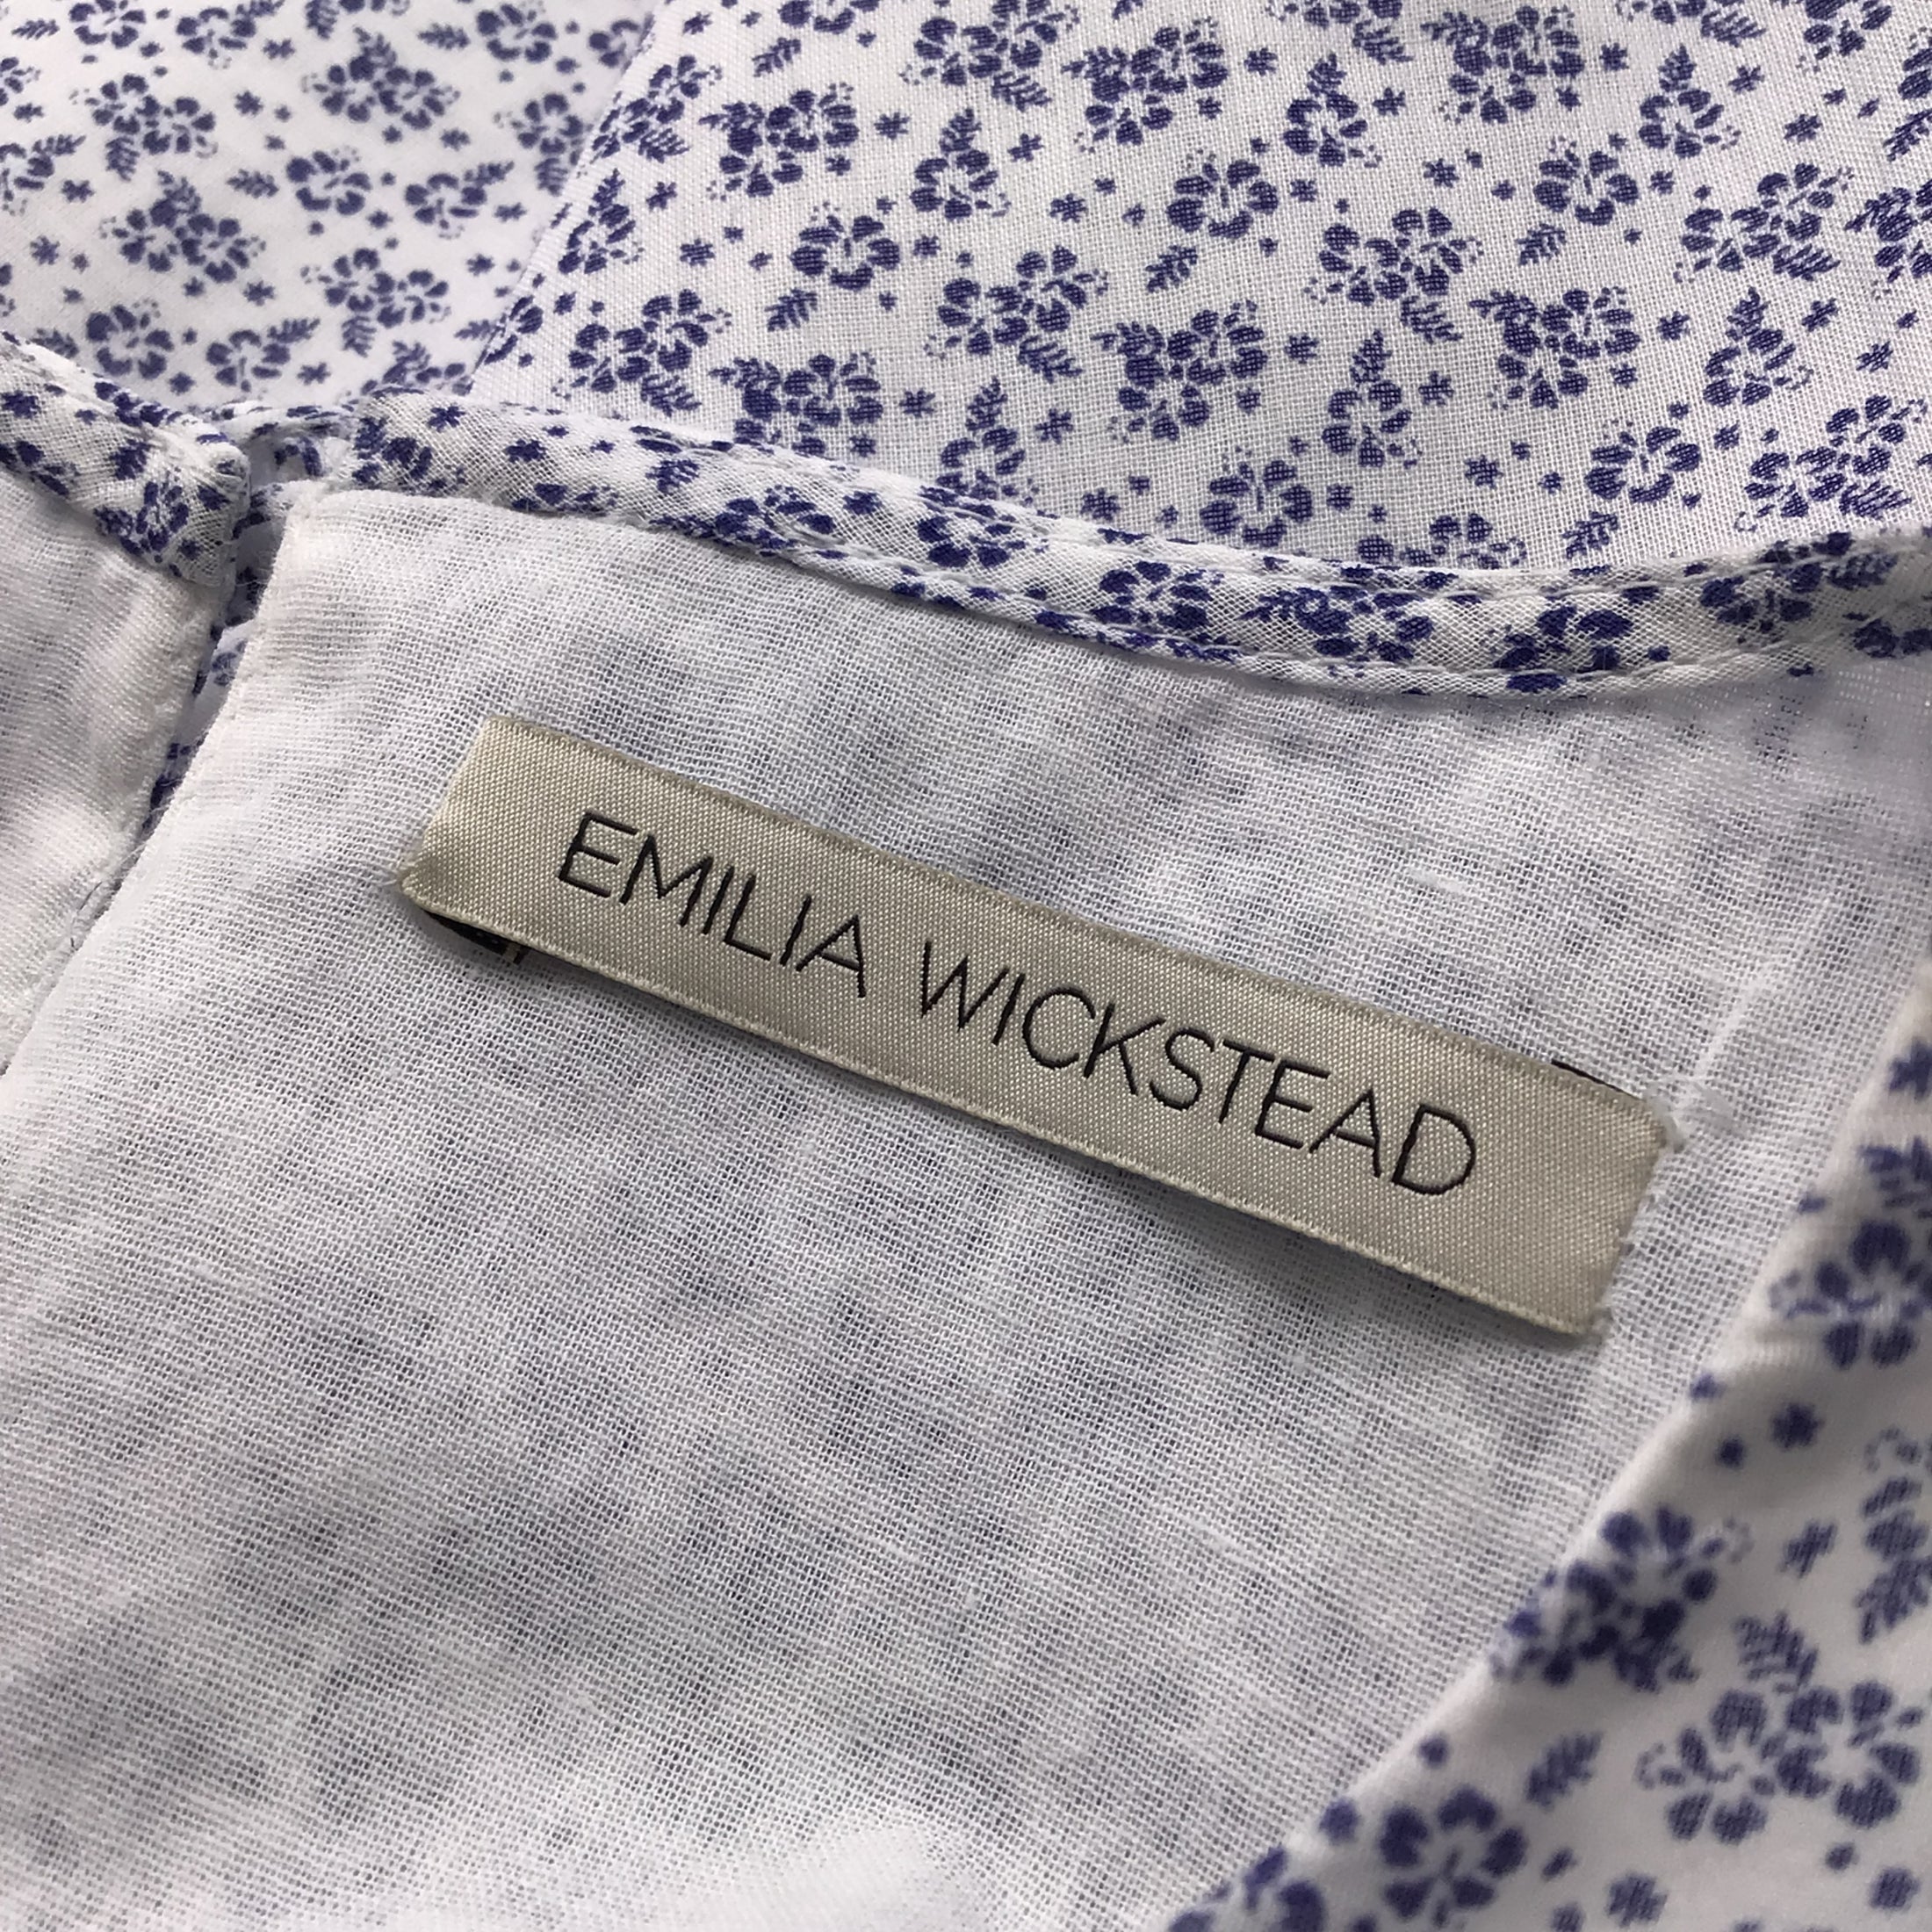 Emilia Wickstead White / Blue Floral Printed Sleeveless Cotton Dress